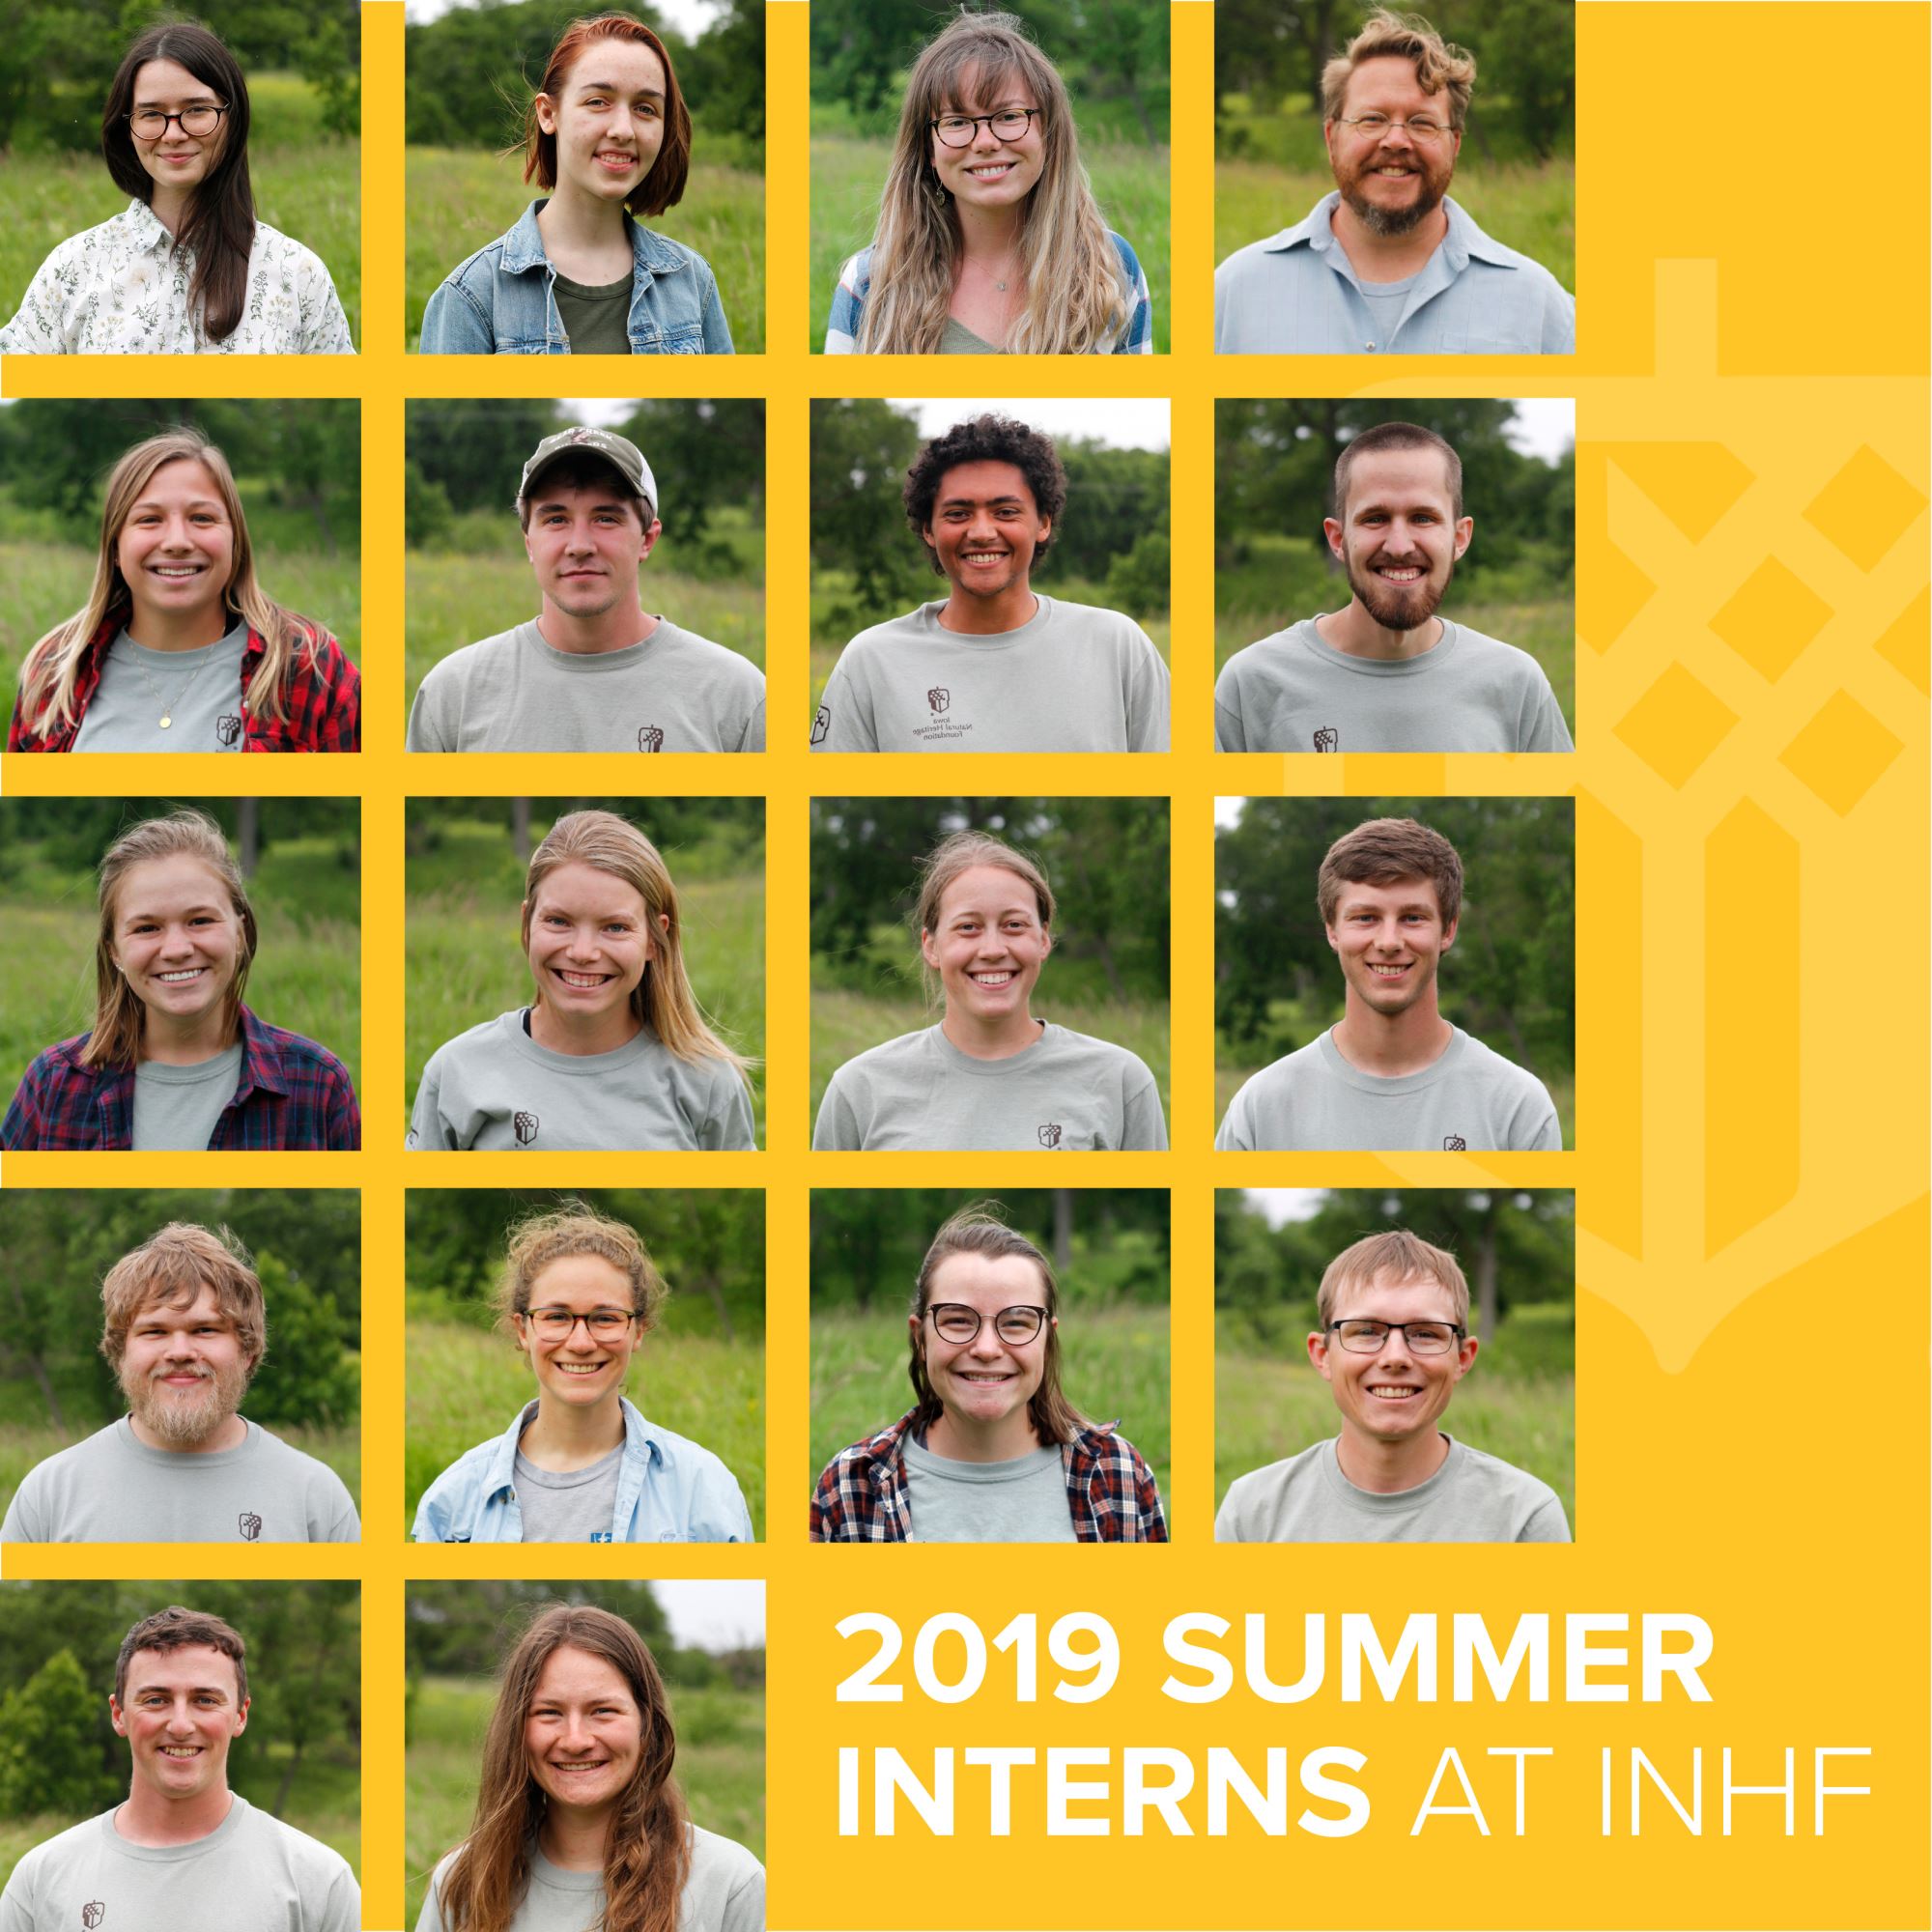 Meet INHF's 2019 Summer Interns